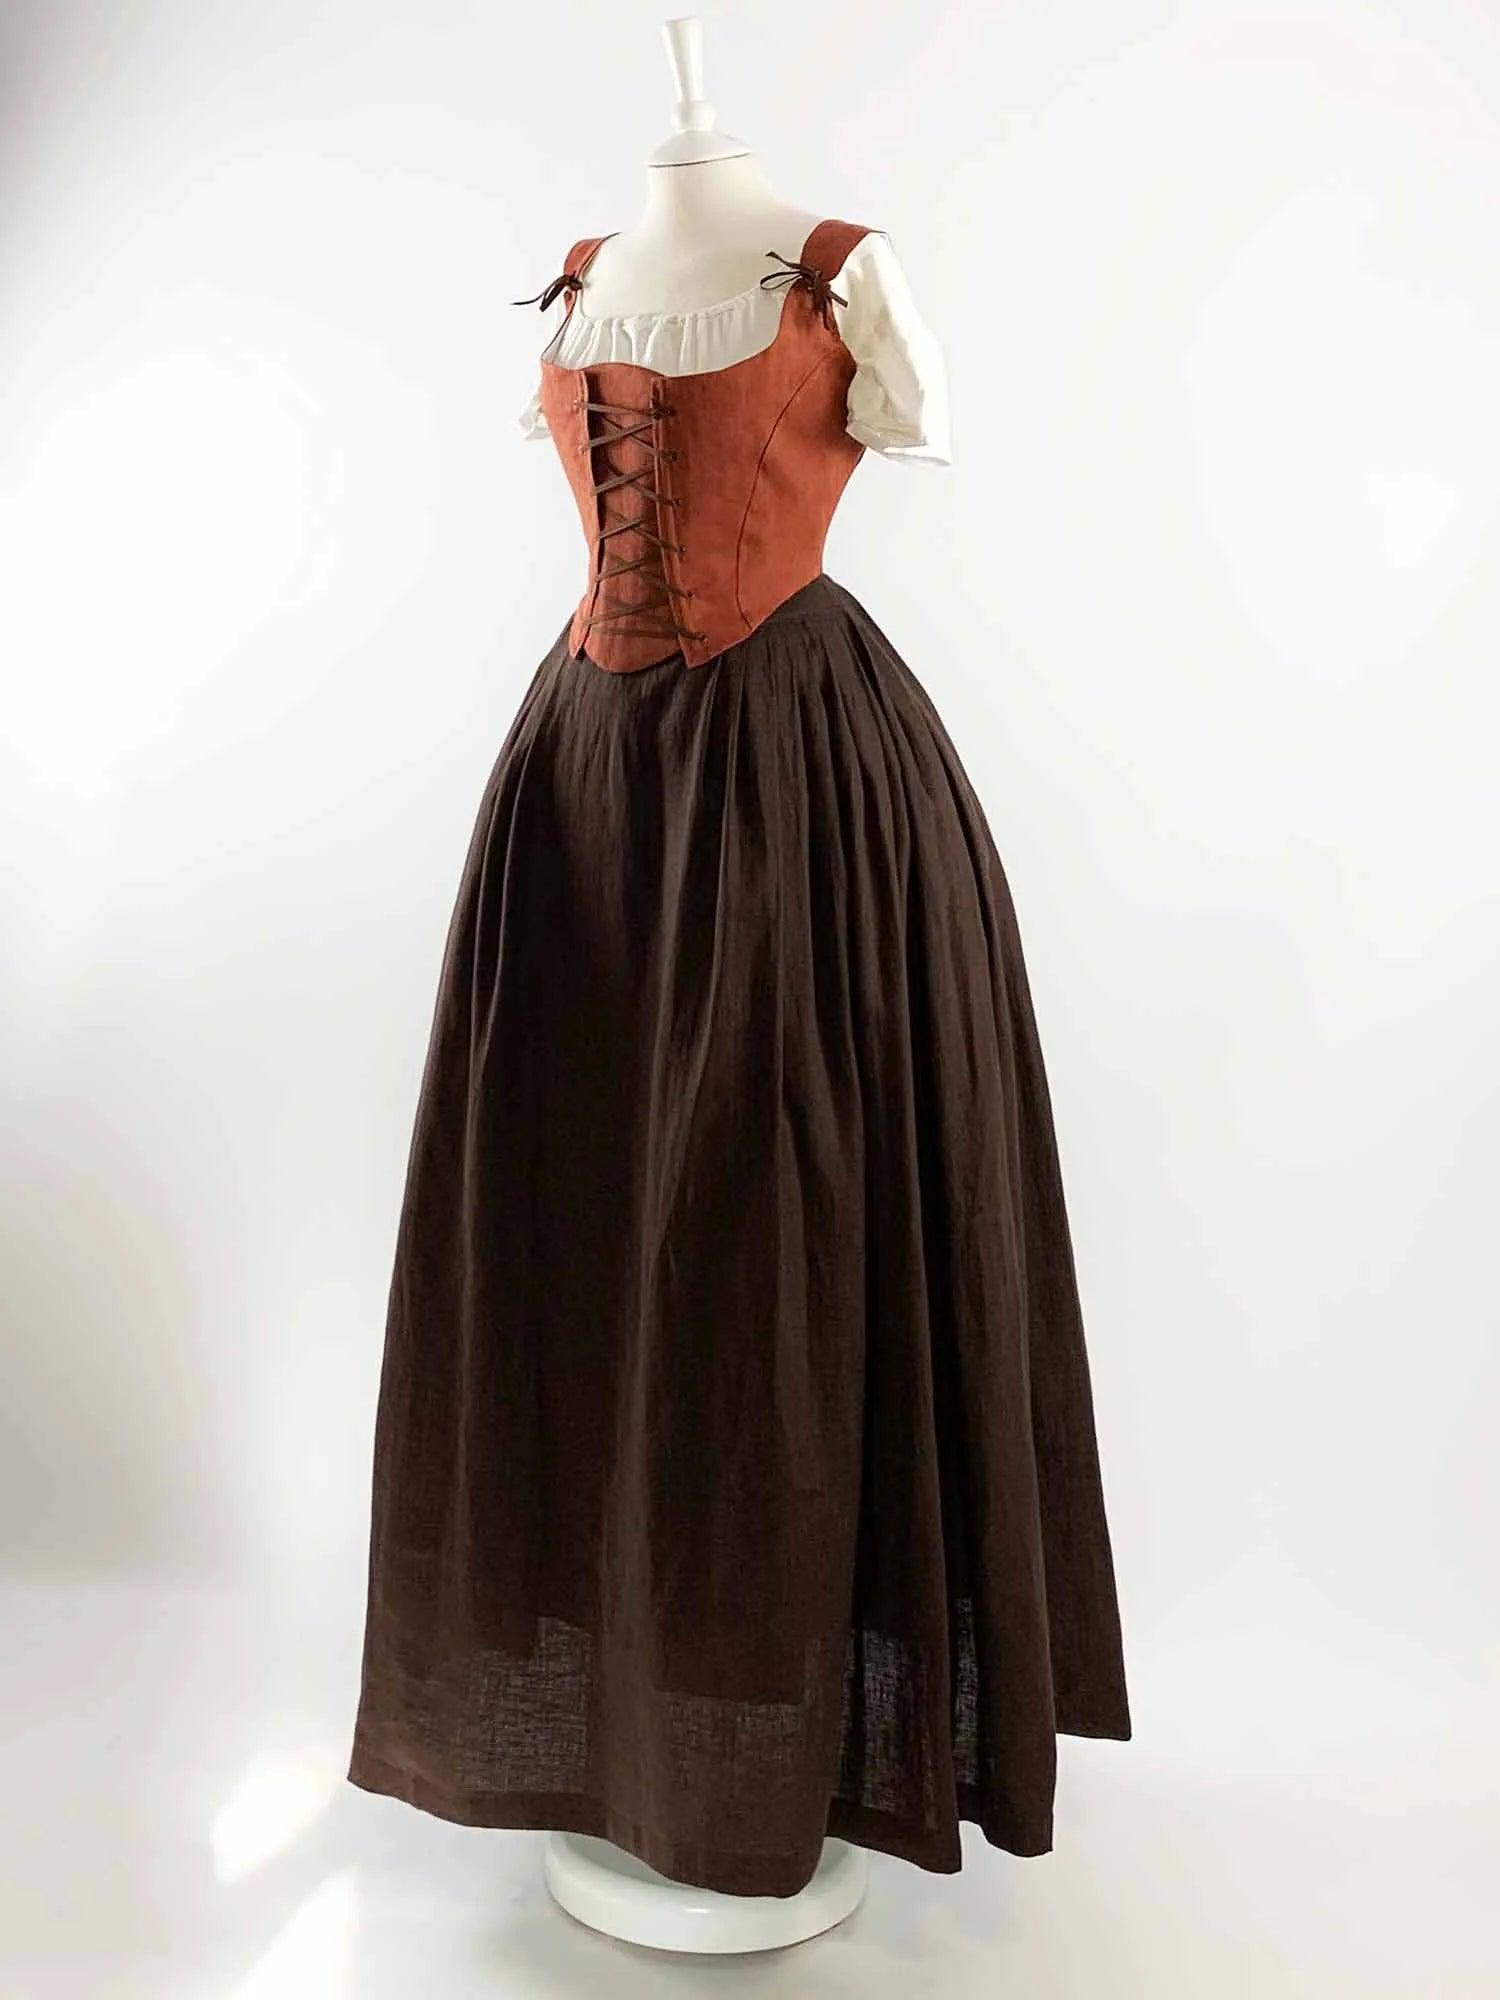 ISOLDE, Renaissance Costume in Rust Orange & Chocolate Linen - Atelier Serraspina